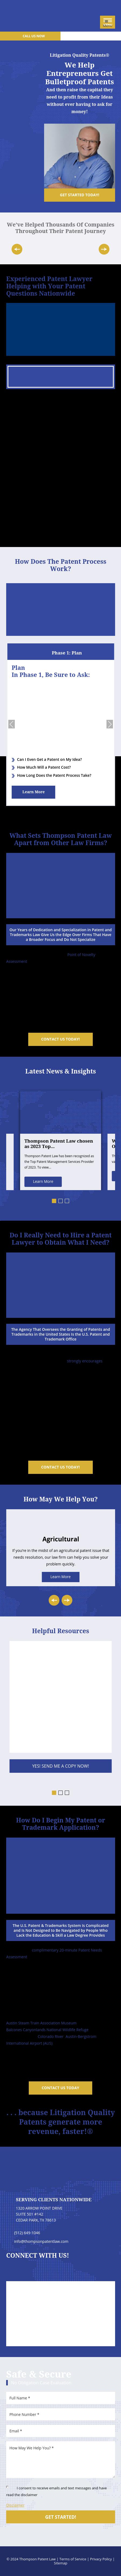 Thompson Patent Law - Cedar Park TX Lawyers